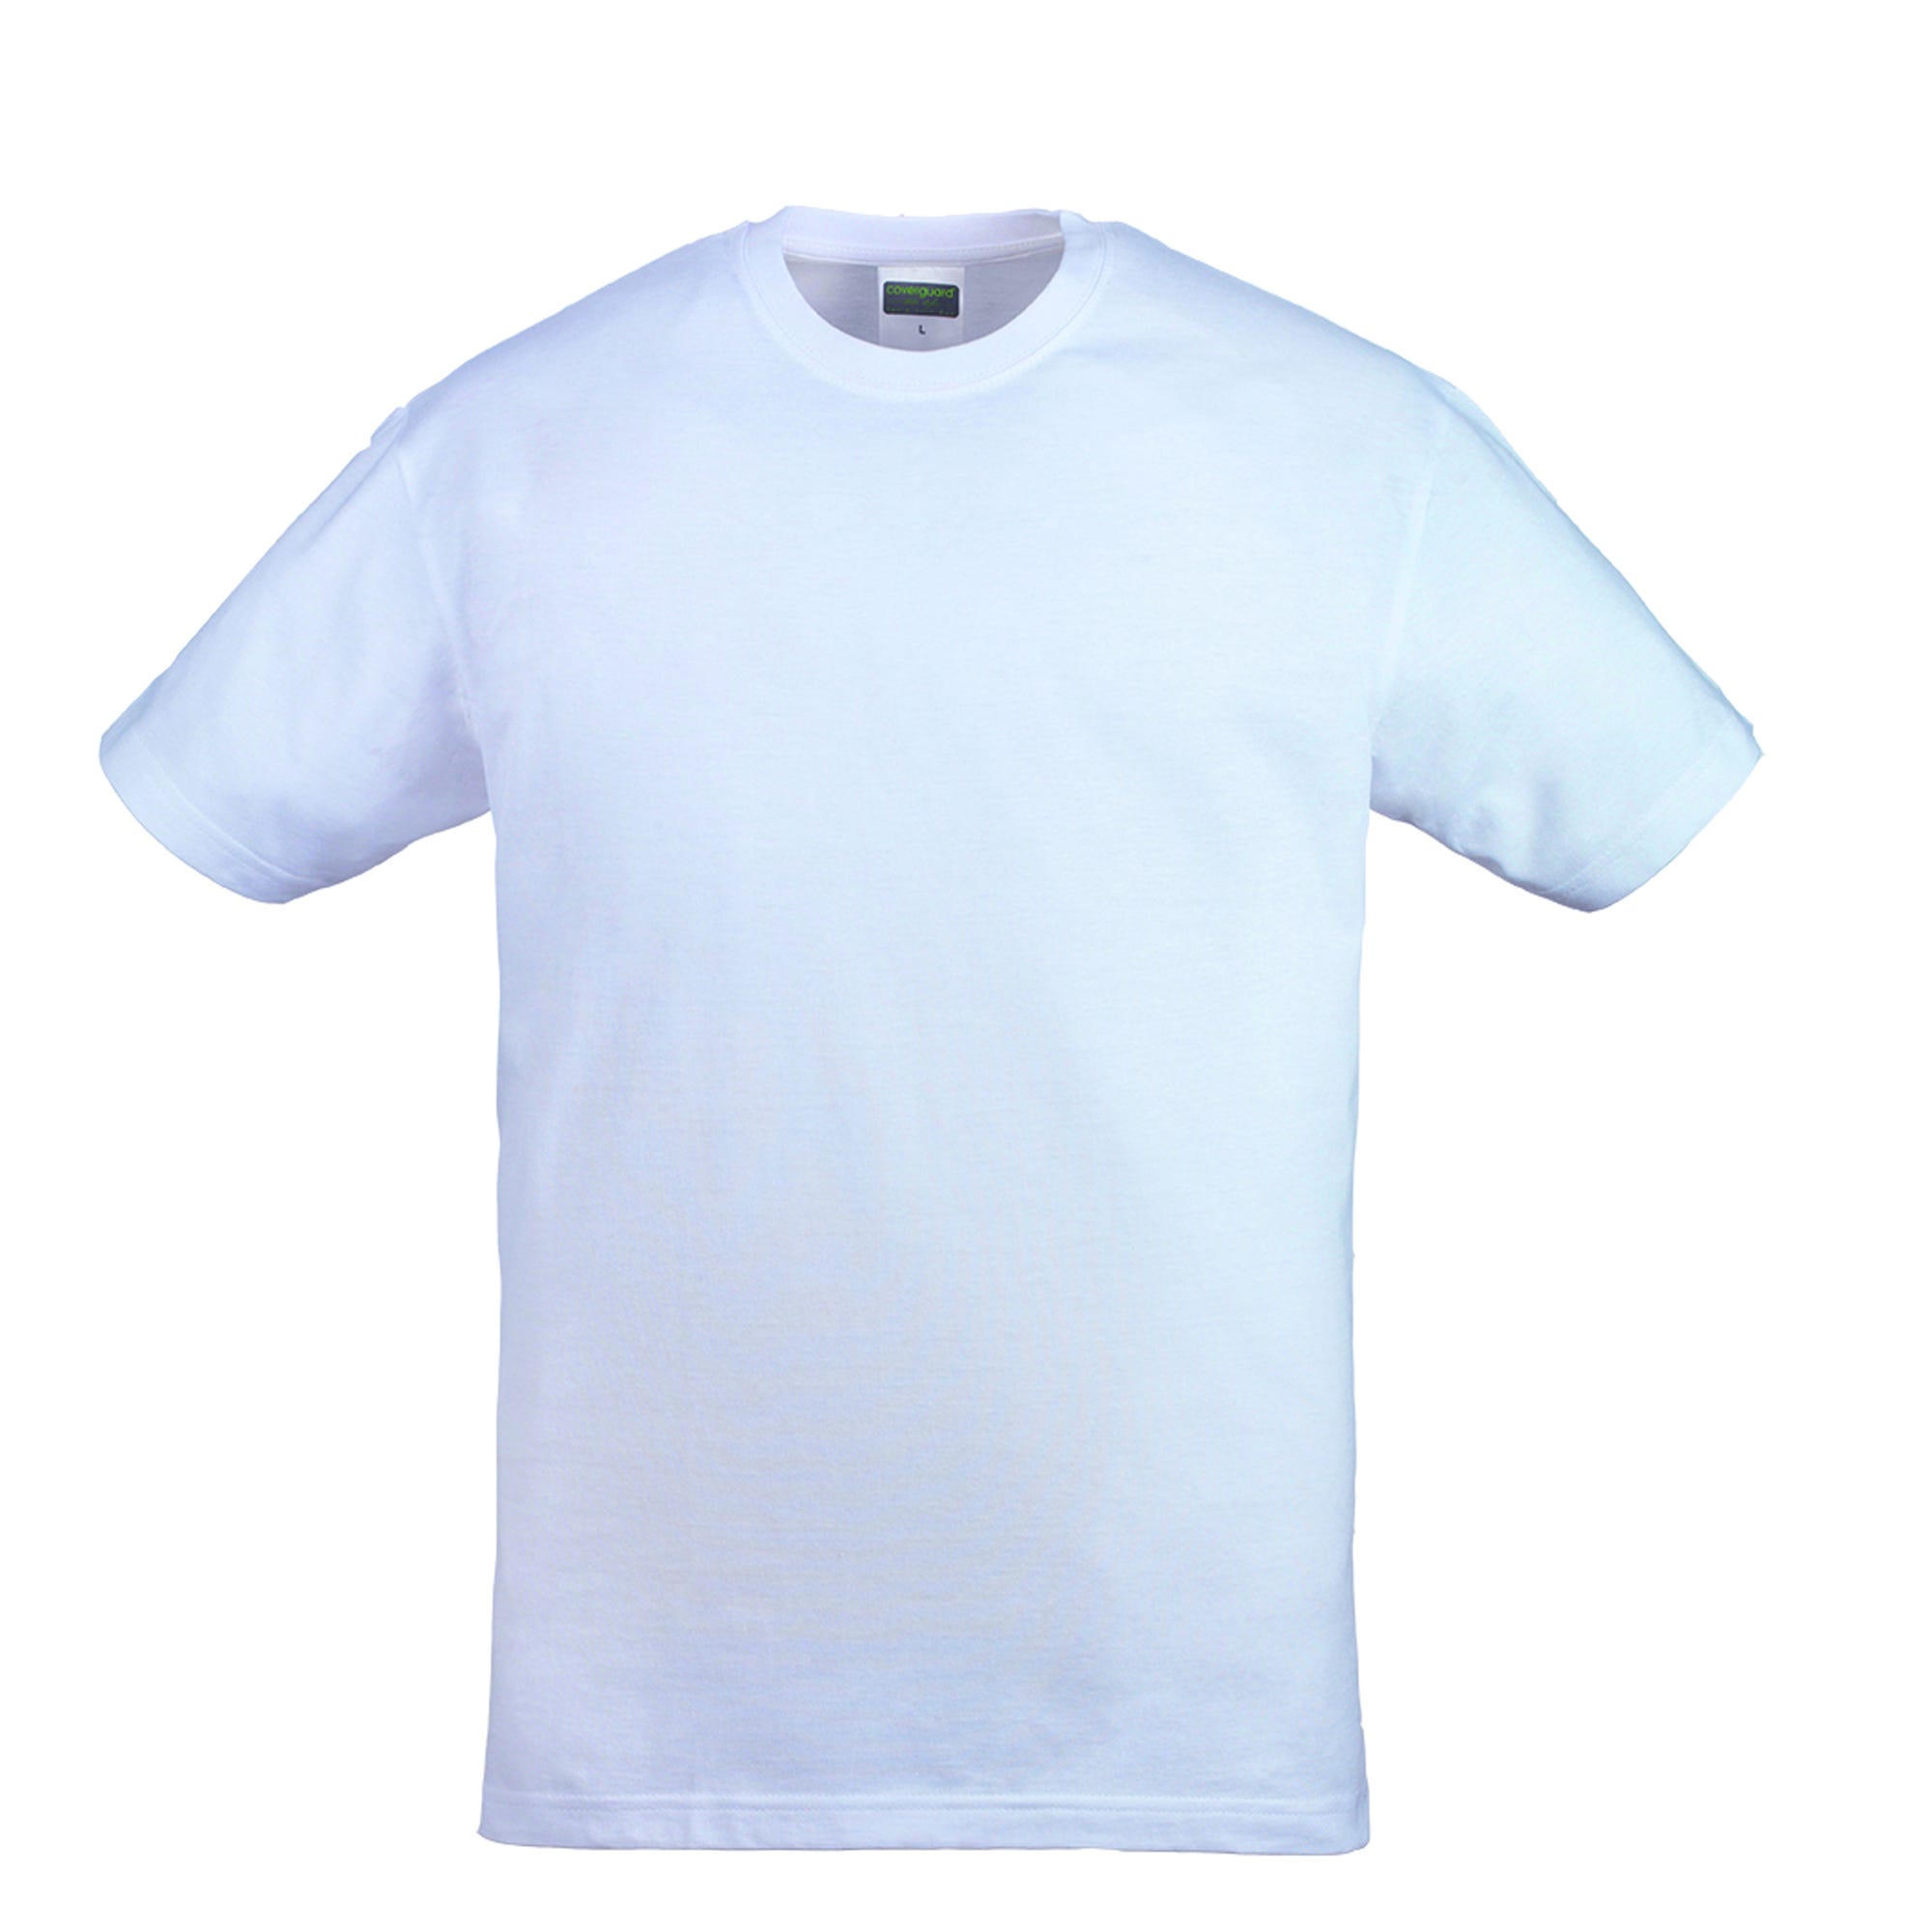 HIKE T-shirt MC blanc, 100% coton, 190g/m² - COVERGUARD - Taille S 1